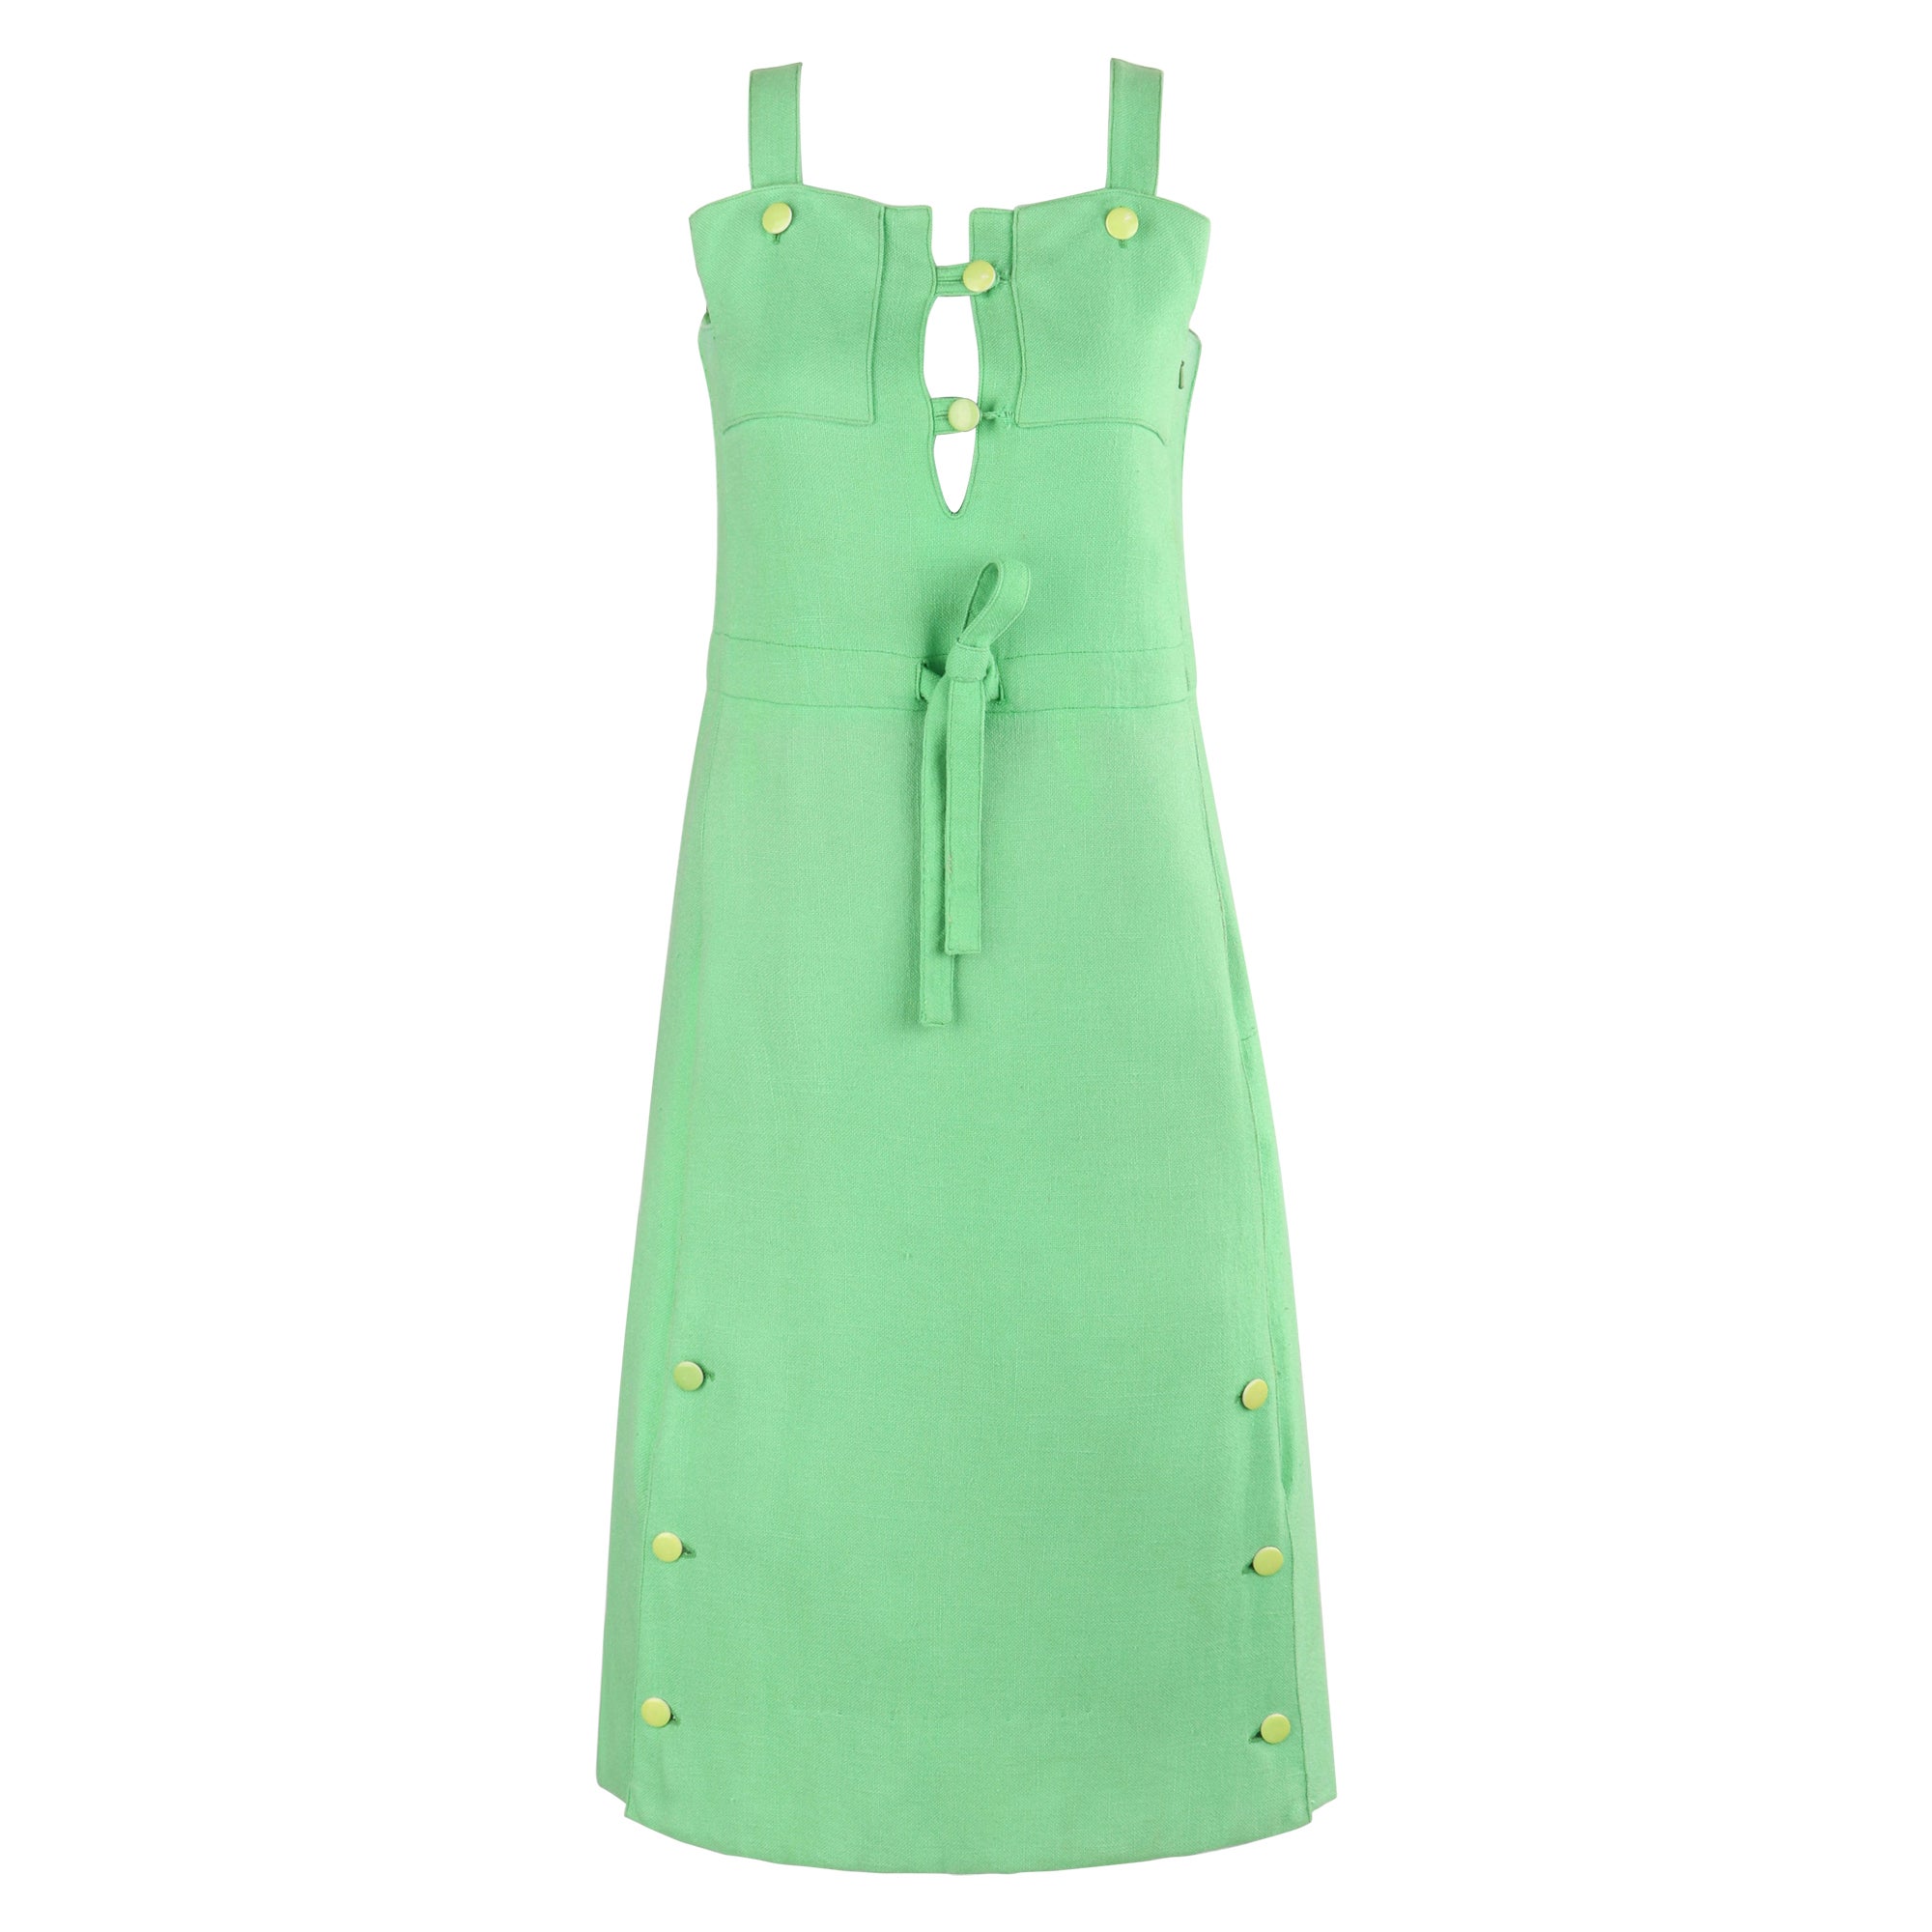 COURREGES Paris c.1960's Vtg Mint Green Tie Front Overall Midi Day Dress